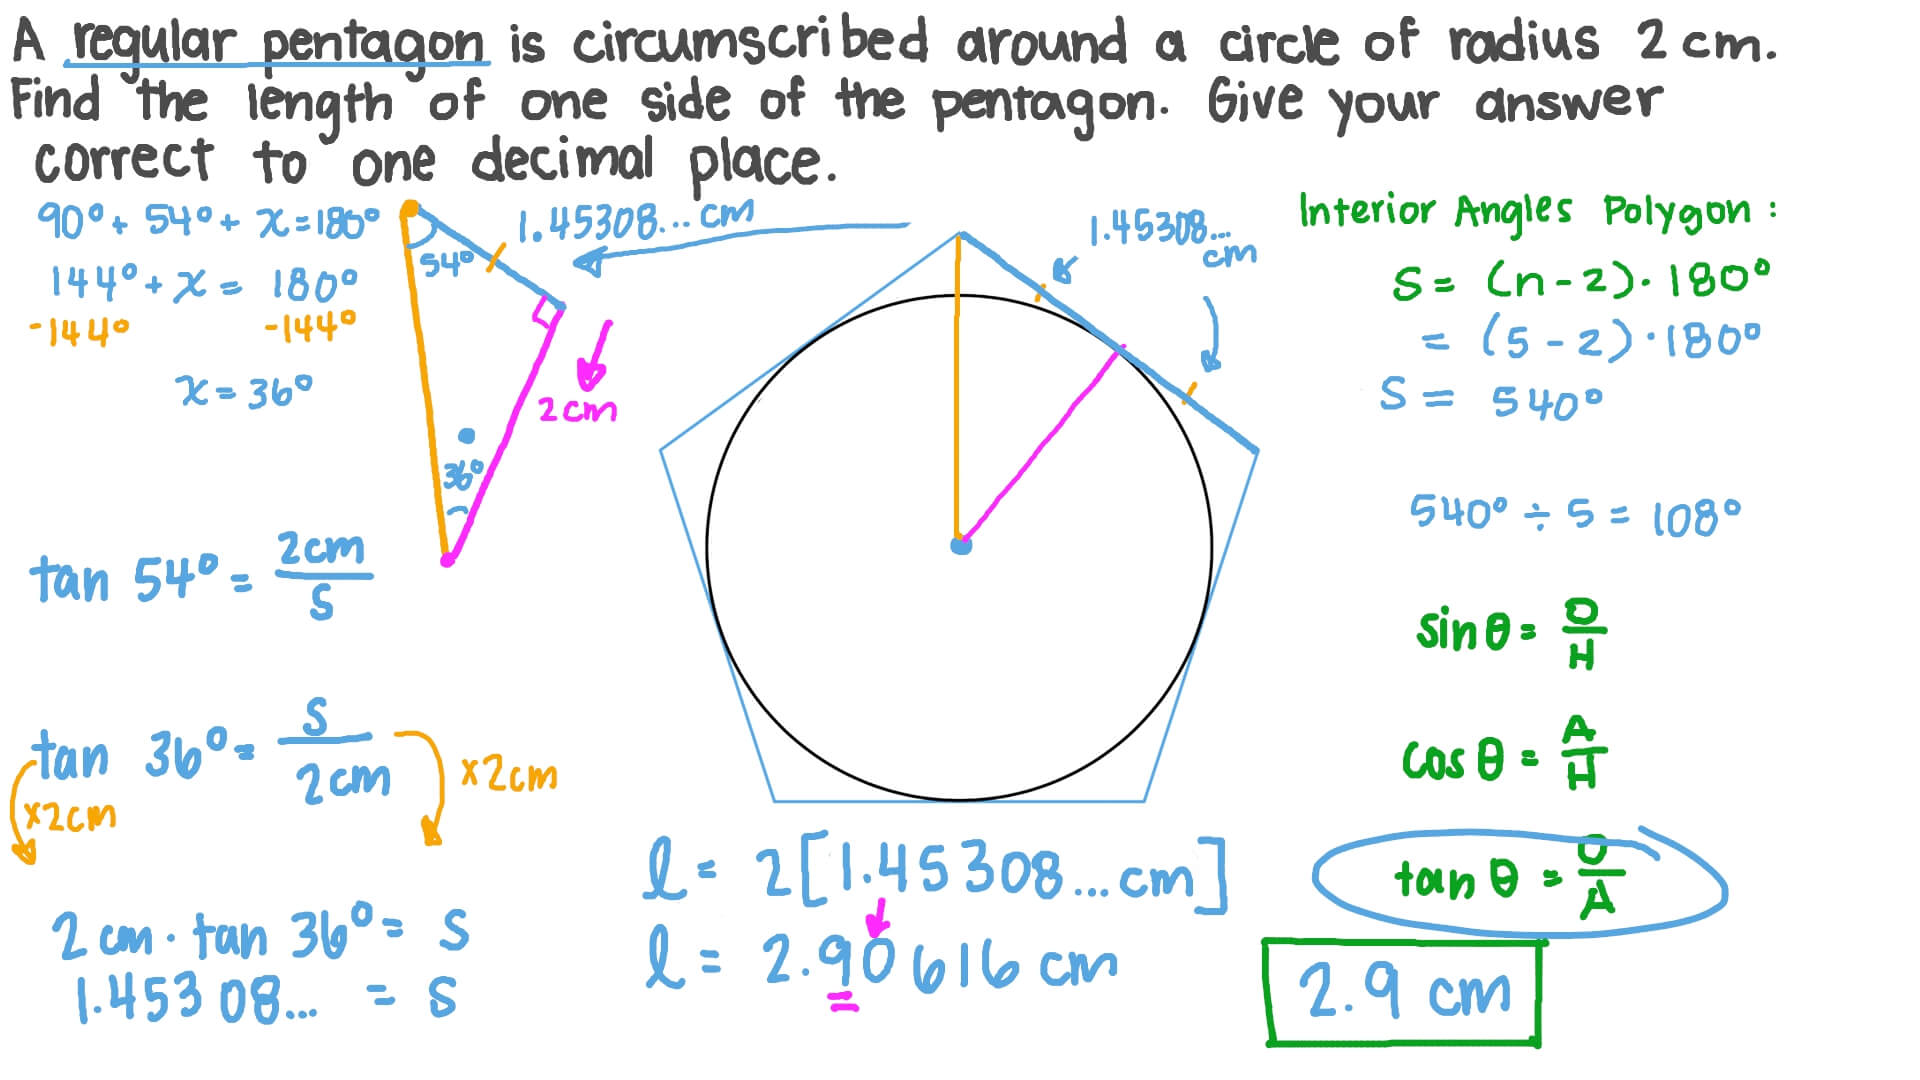 finding-the-radius-of-a-circle-circumscribed-around-a-regular-polygon